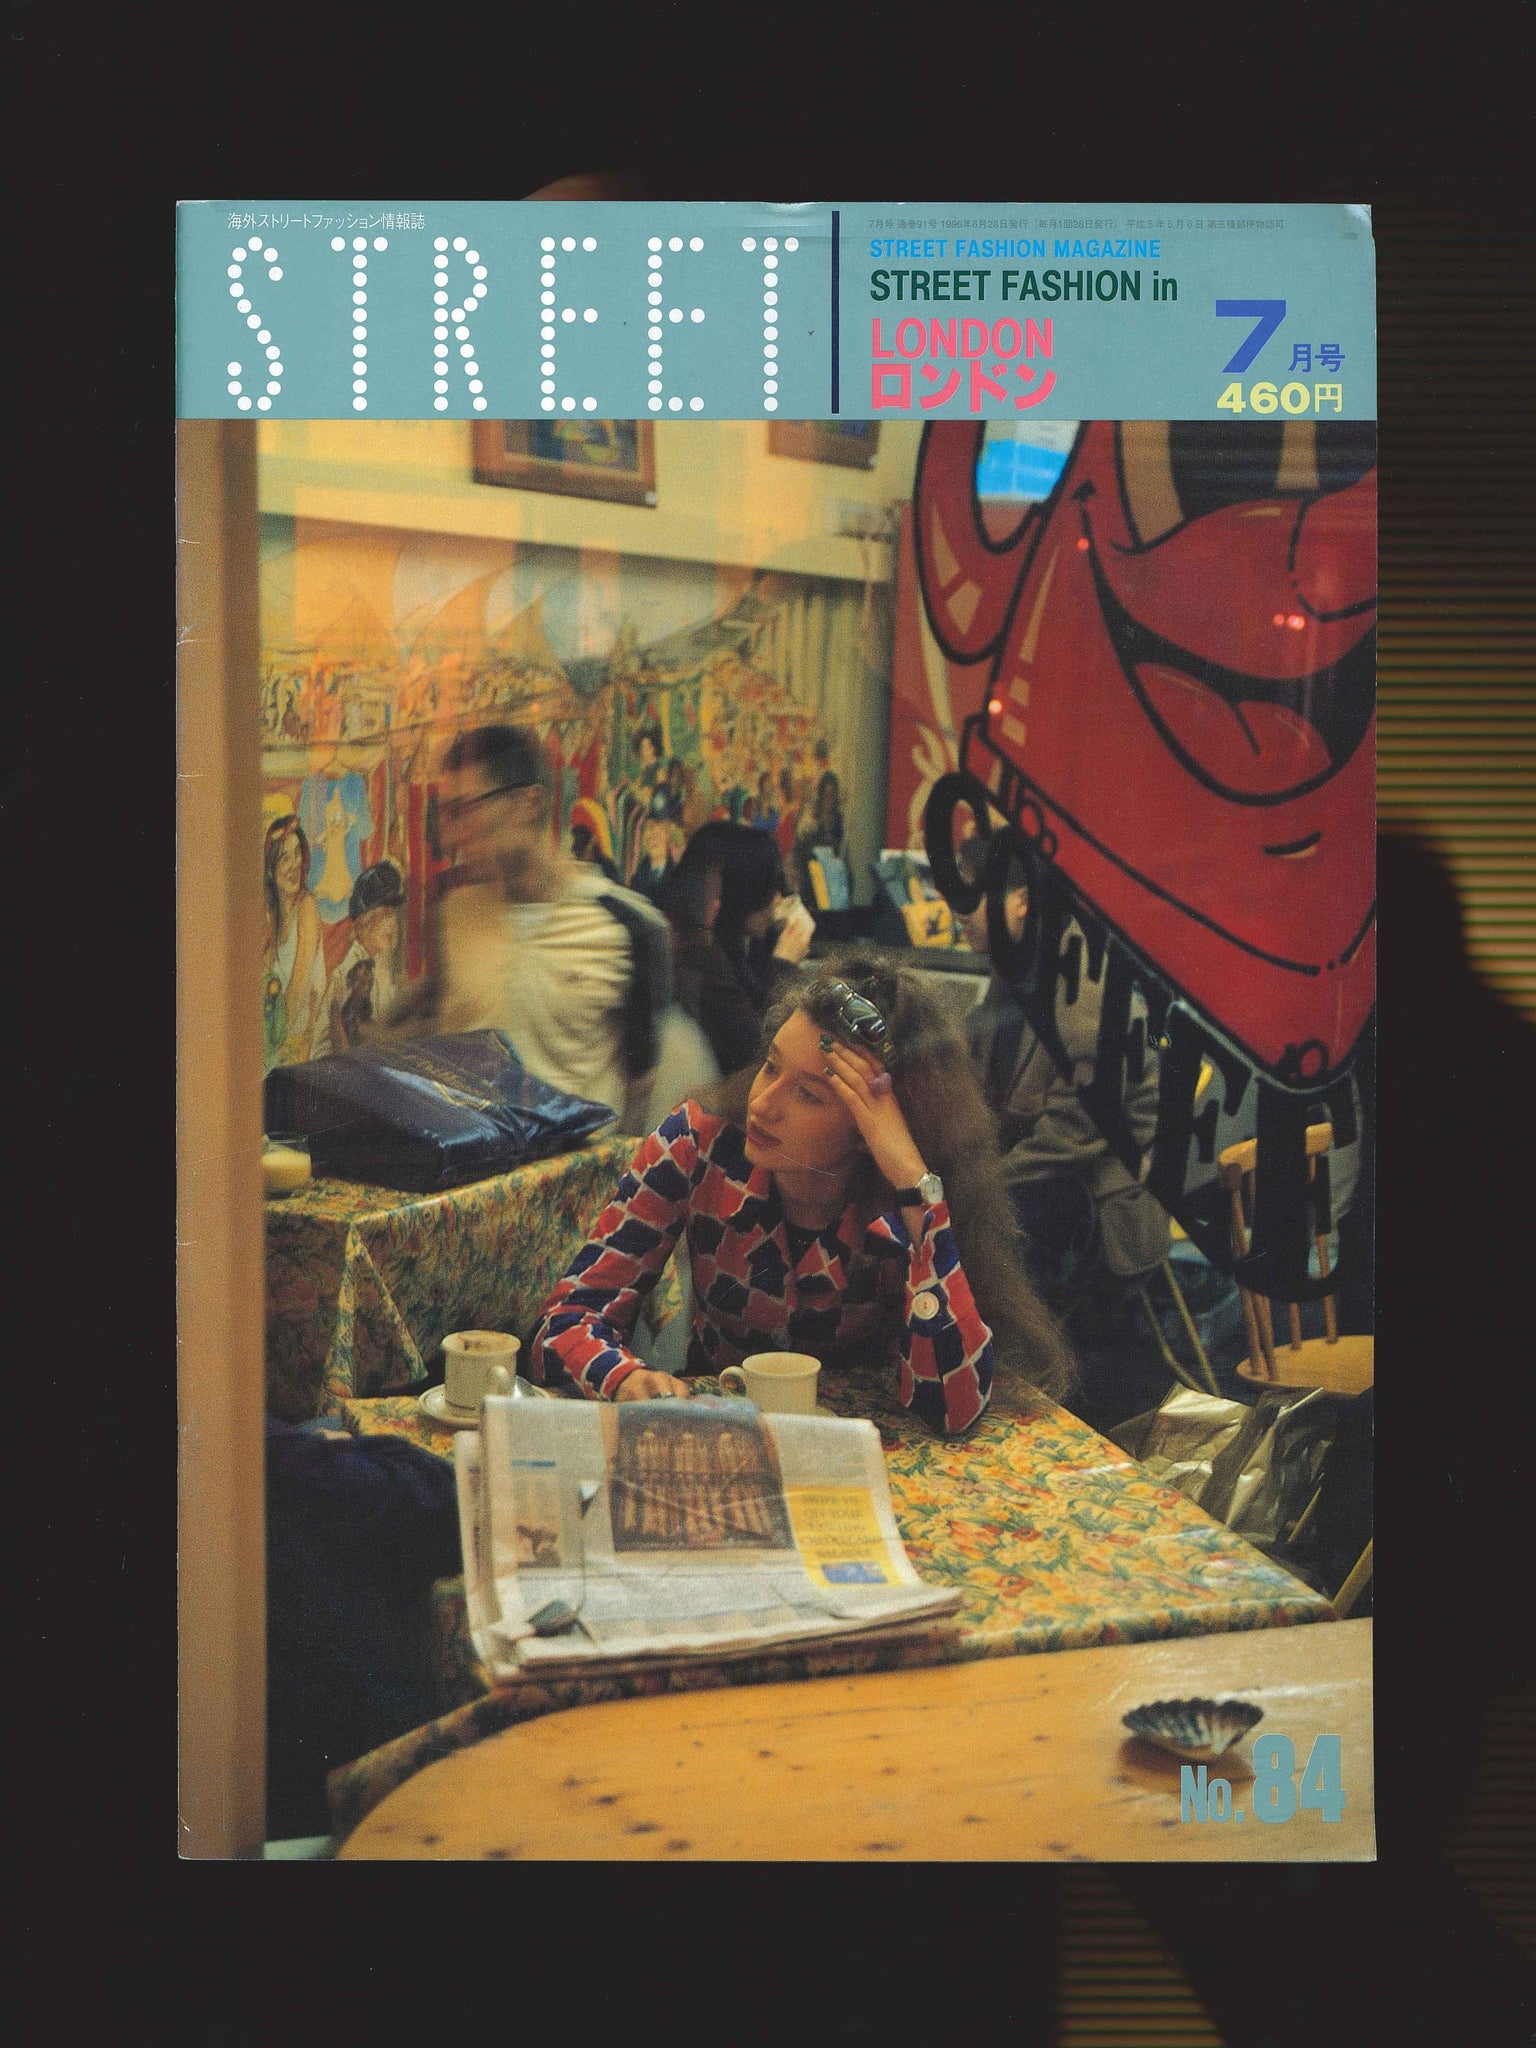 STREET magazine no. 84 / july 1996 / street fashion in london / Shoichi Aoki